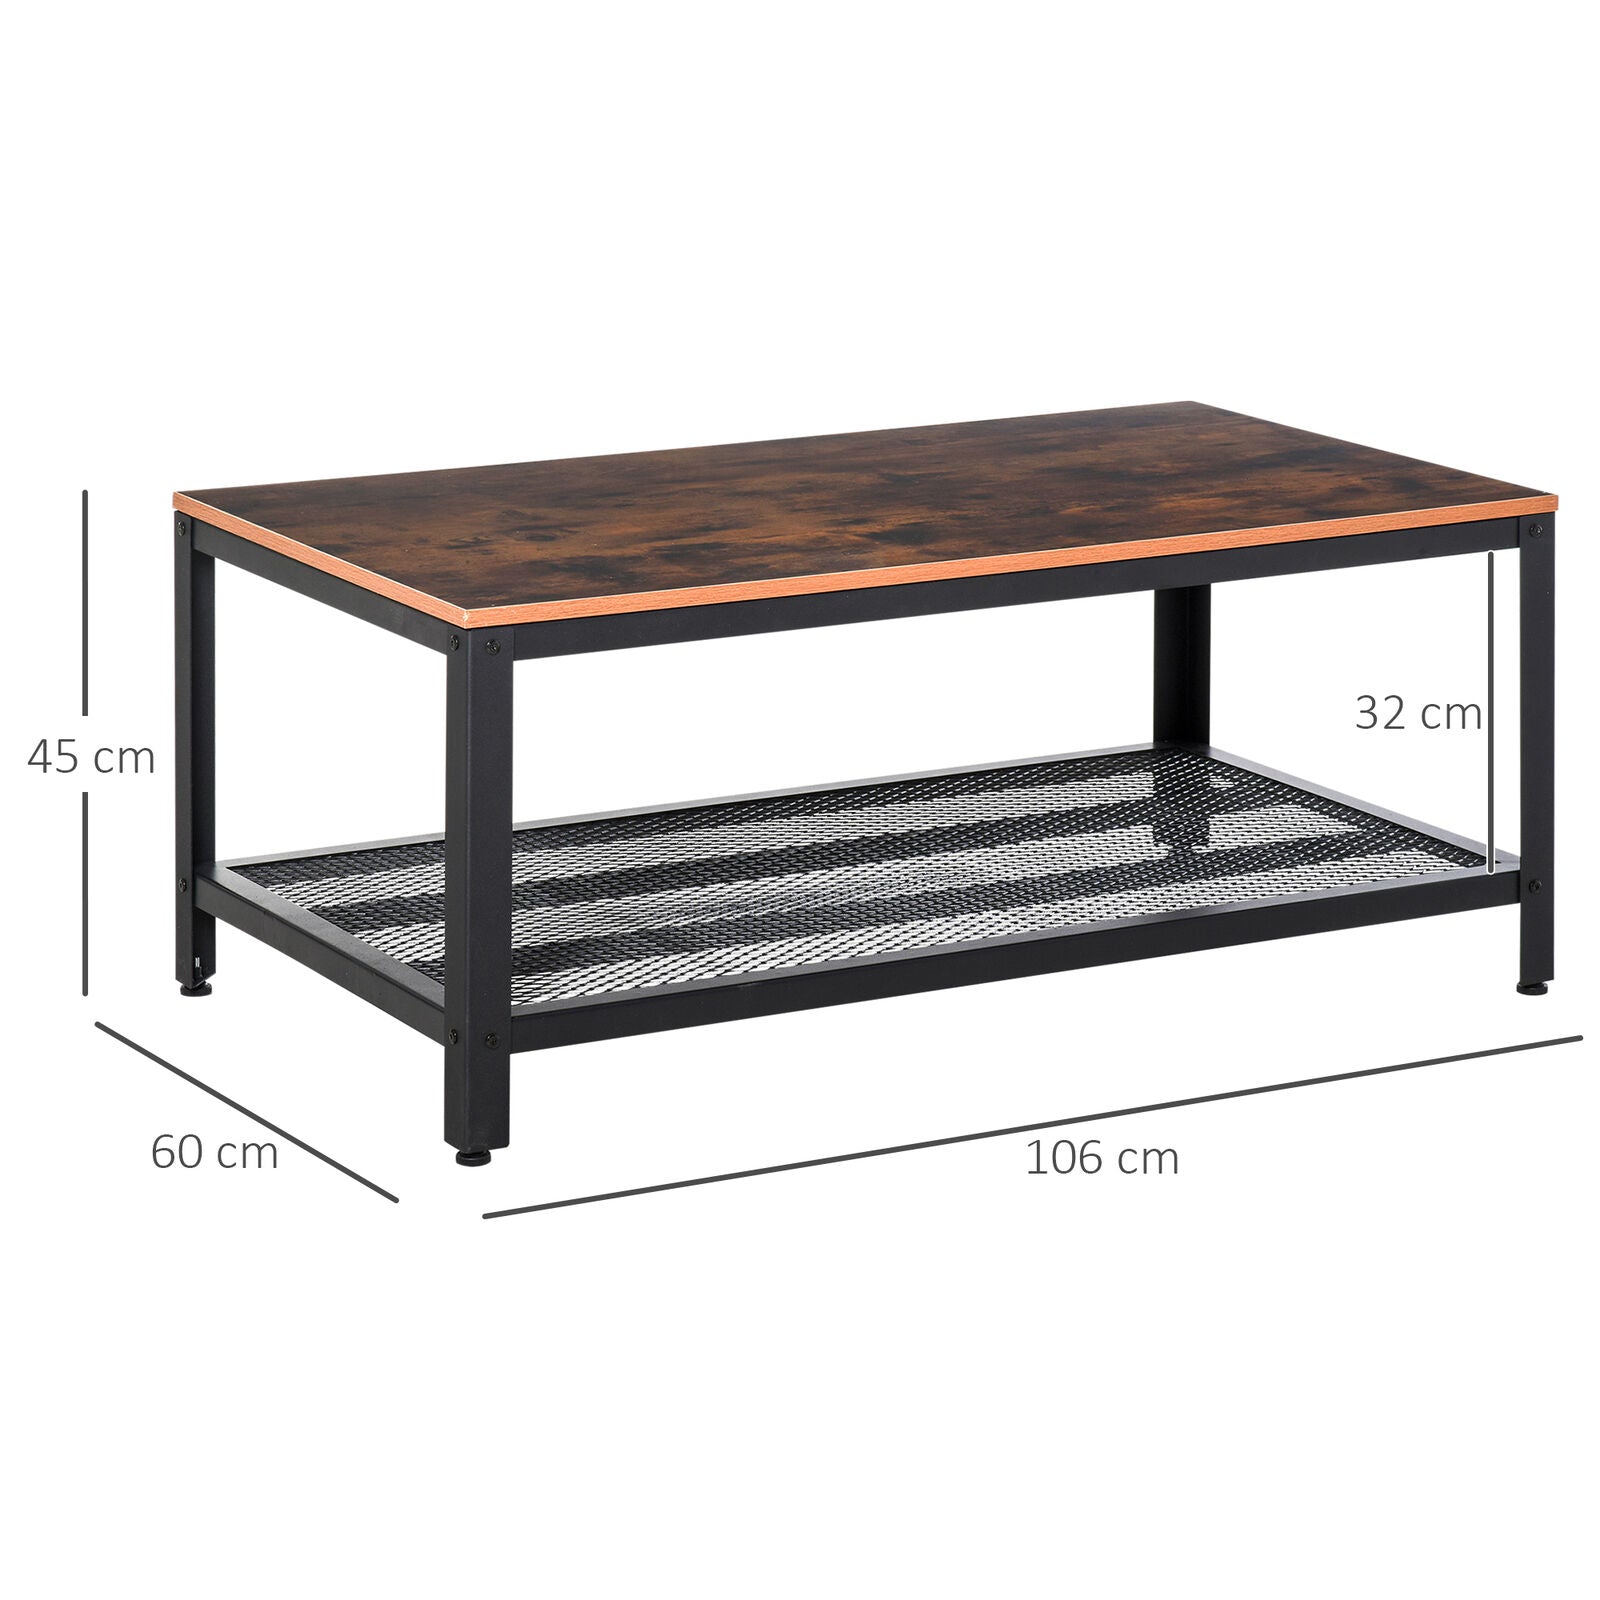 2-Tier Wooden Coffee Table Retro Industrial Style Side Desk Living Room Shelf